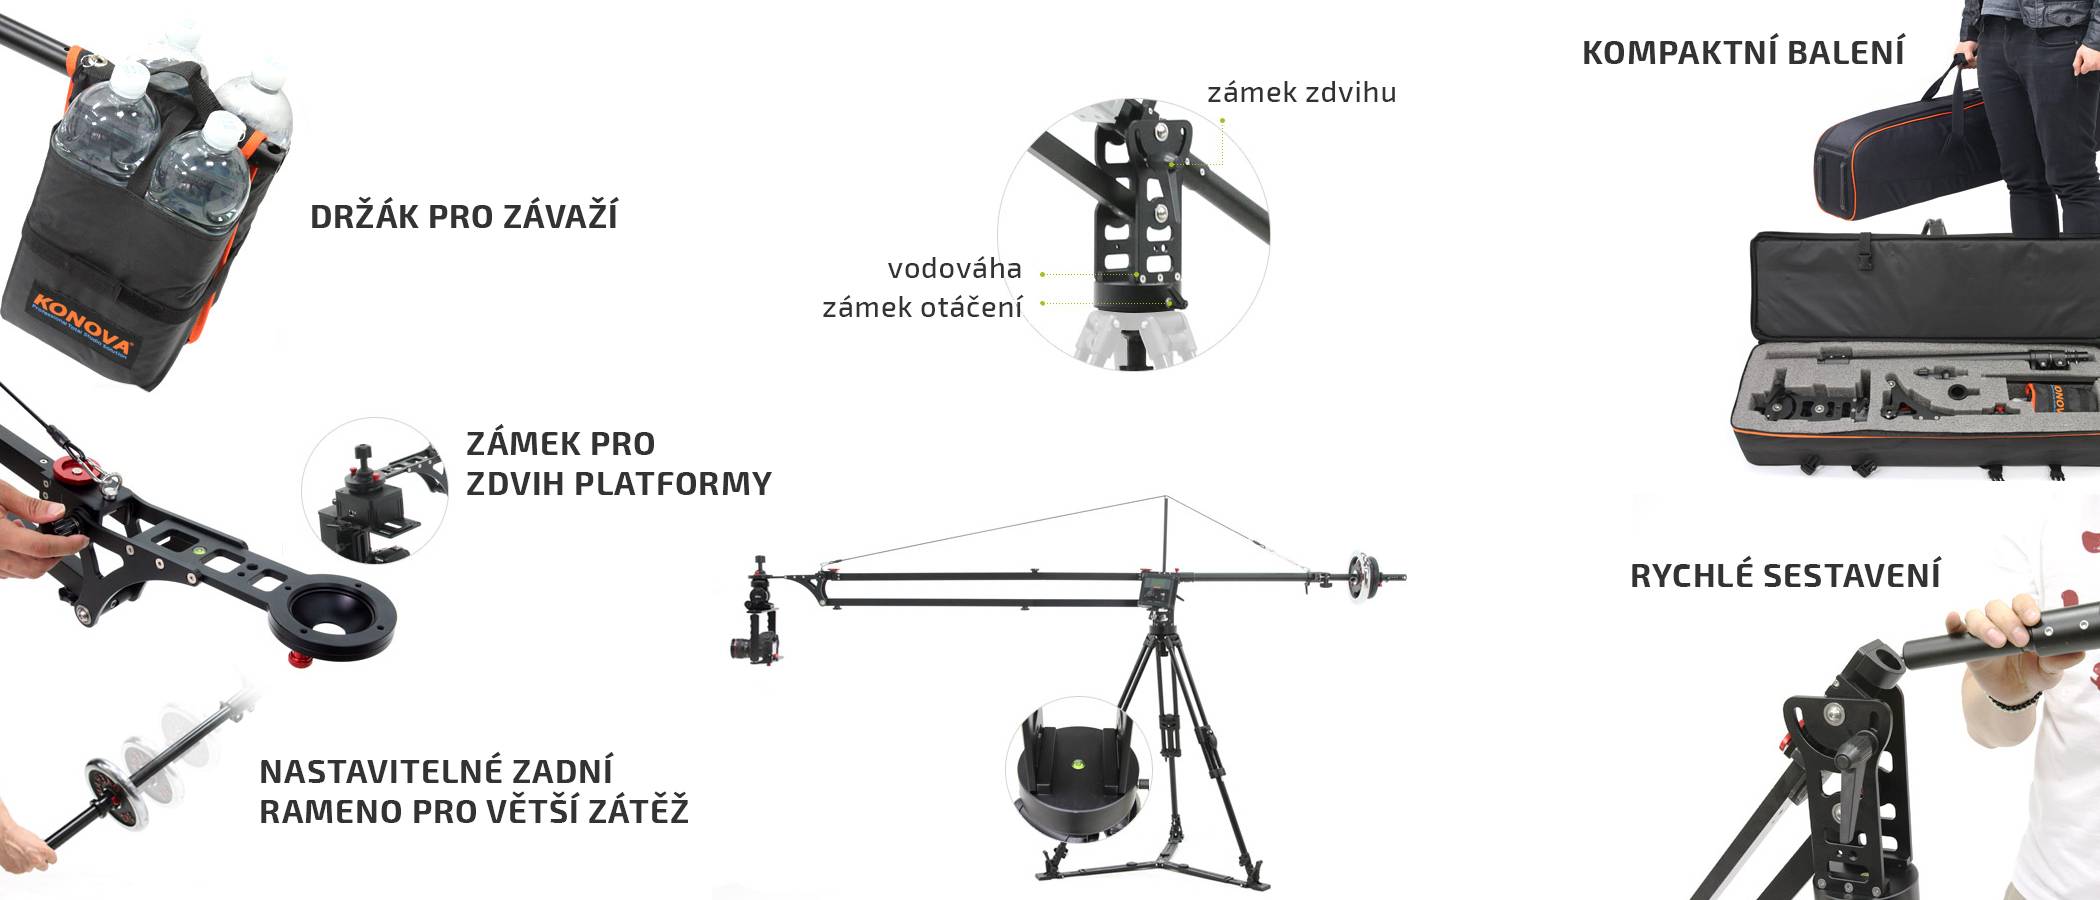 film-technika-konova-slider-jib-j2-kamerový-jeřáb-jednoduchá-kompaktní-balení